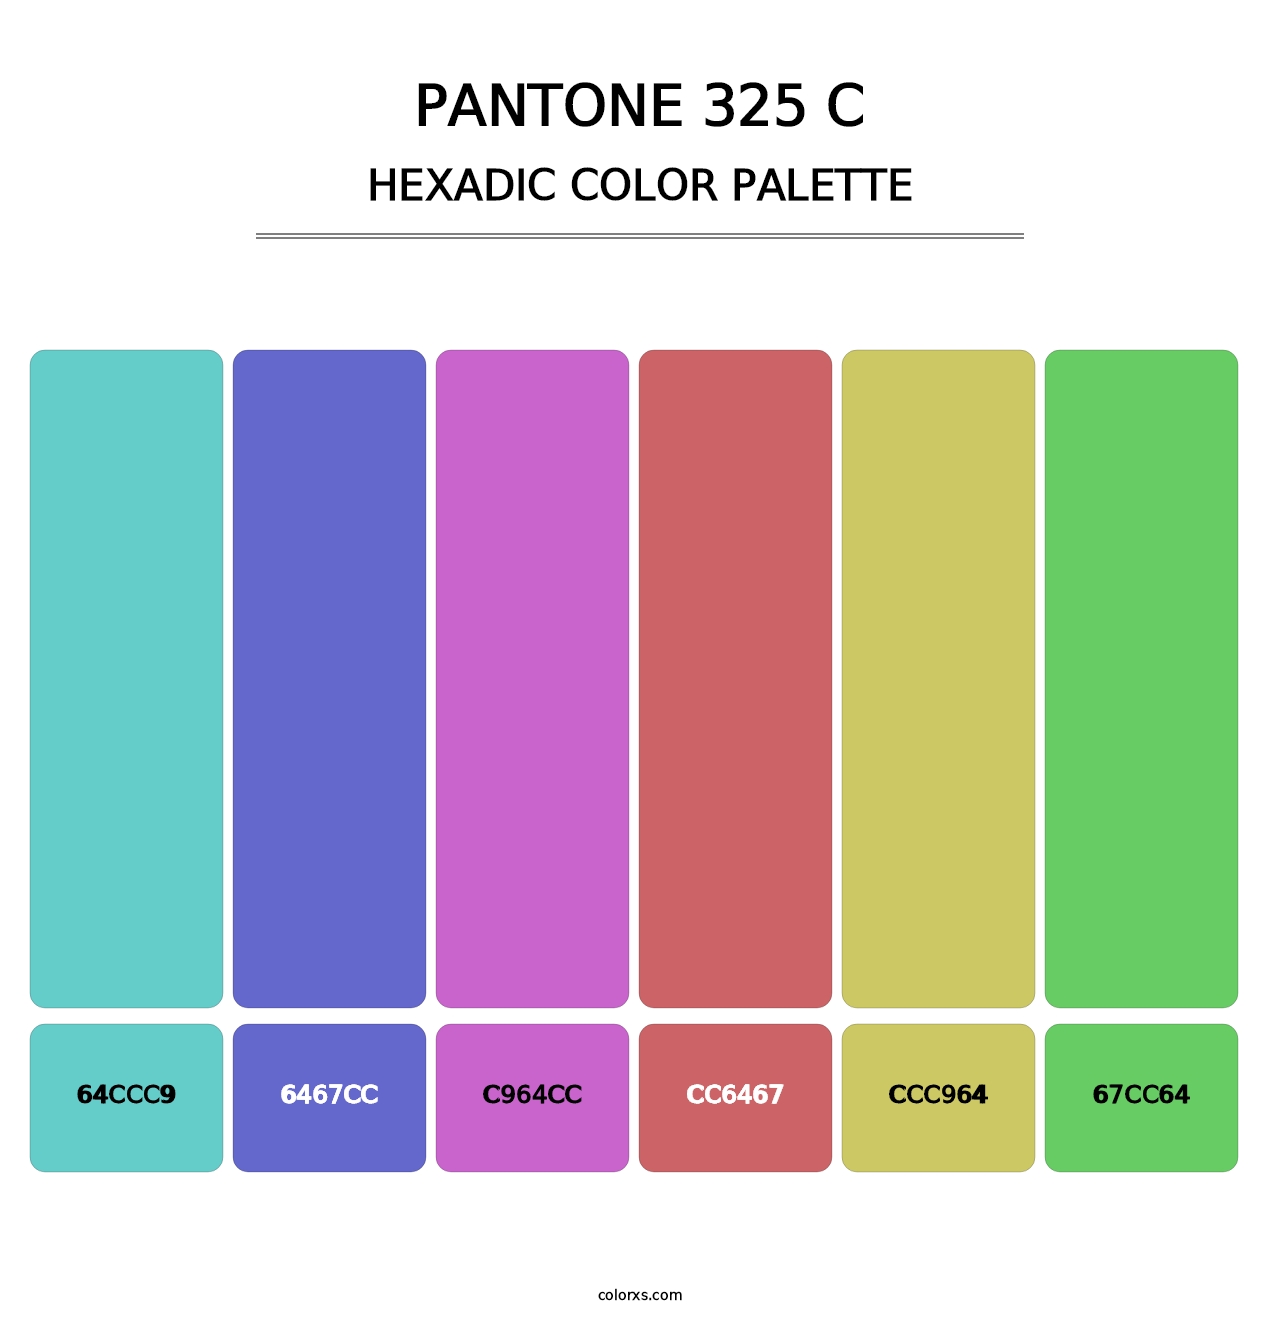 PANTONE 325 C - Hexadic Color Palette